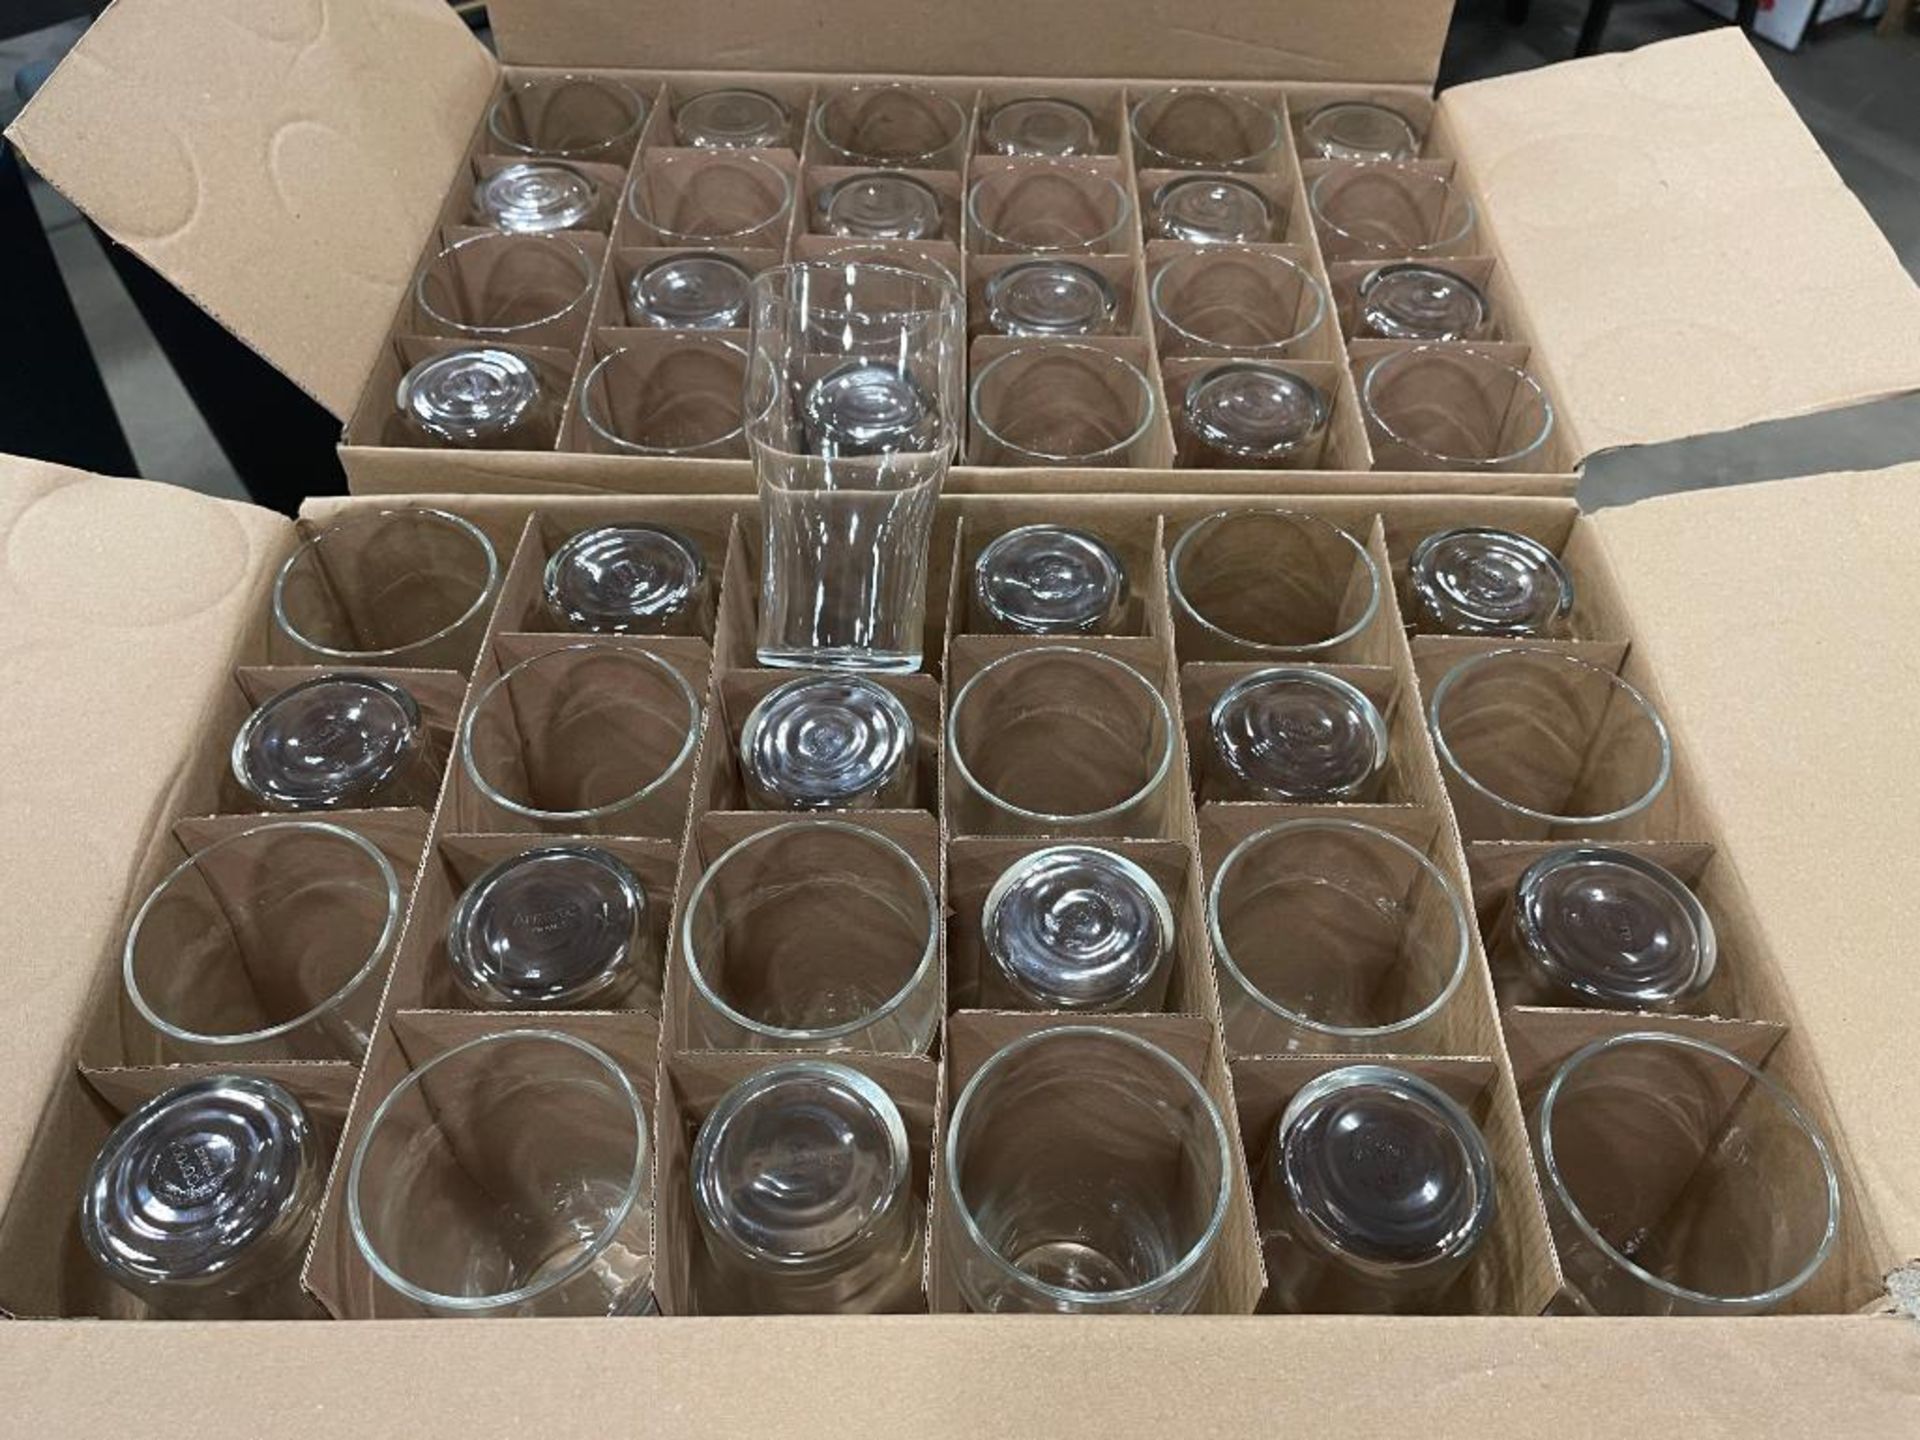 2 CASES OF 12OZ NONIC BEER GLASS, ARCOROC 43740 - 24 PER CASE